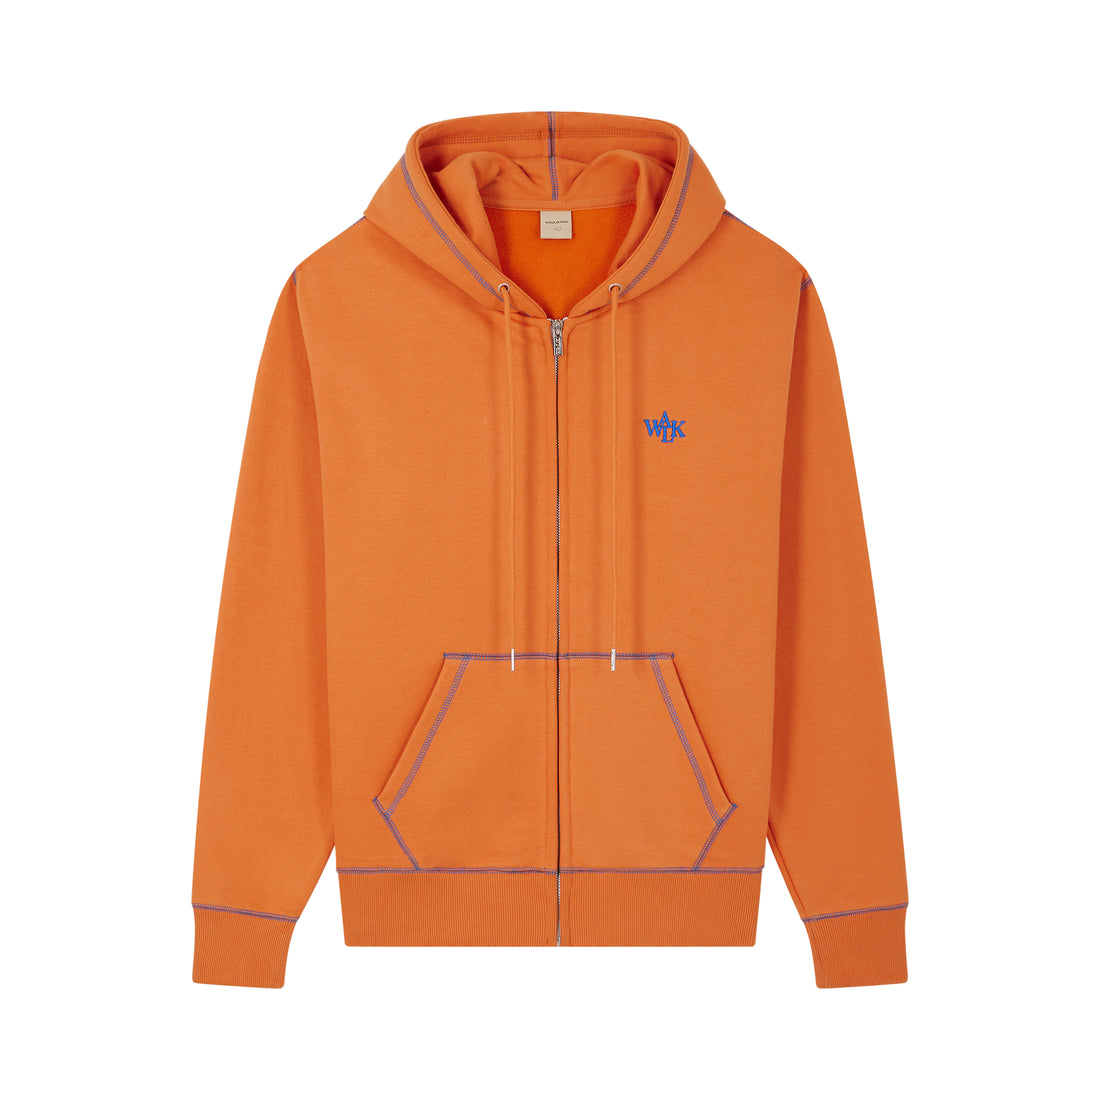 Le hoodie zippé mandarine